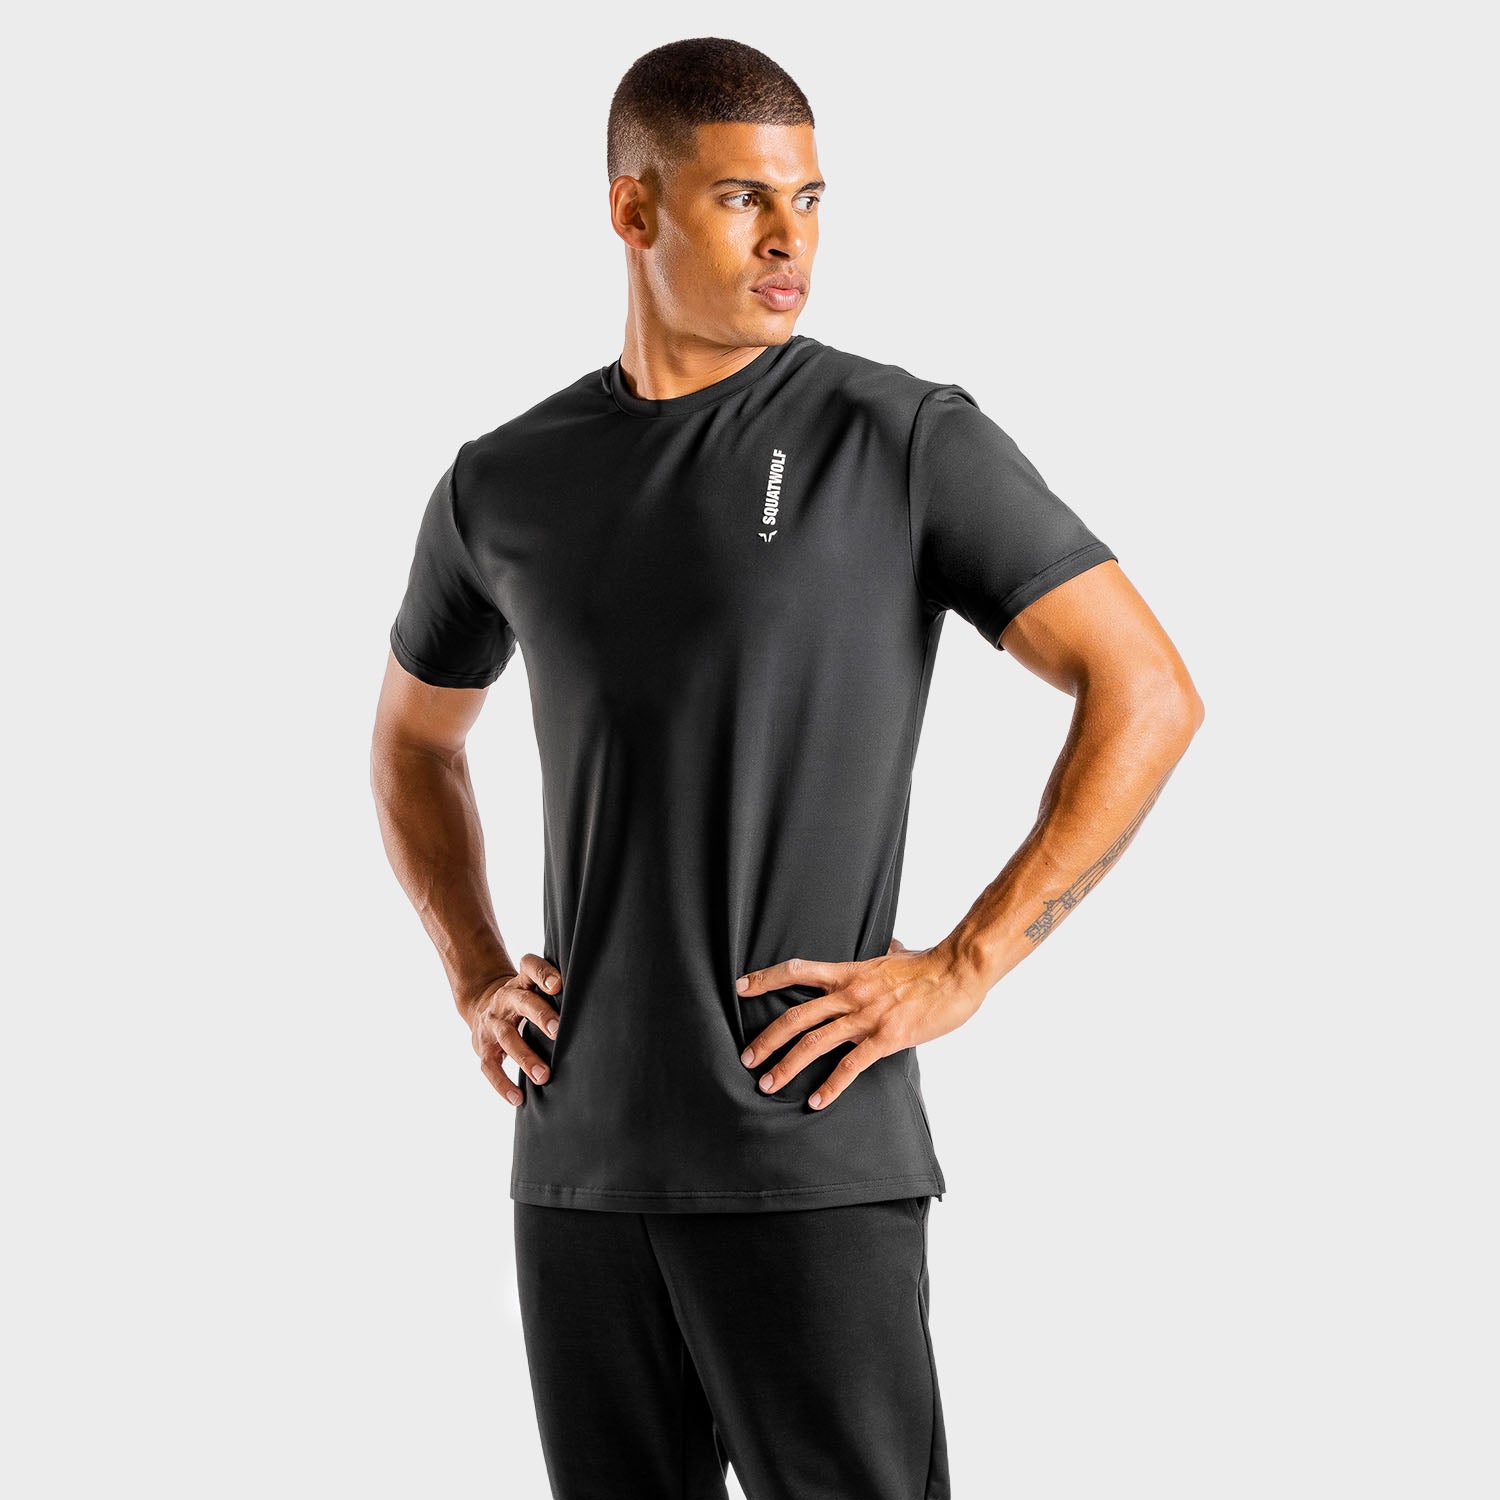 squatwolf-gym-wear-flux-tee-black-workout-shirts-for-men